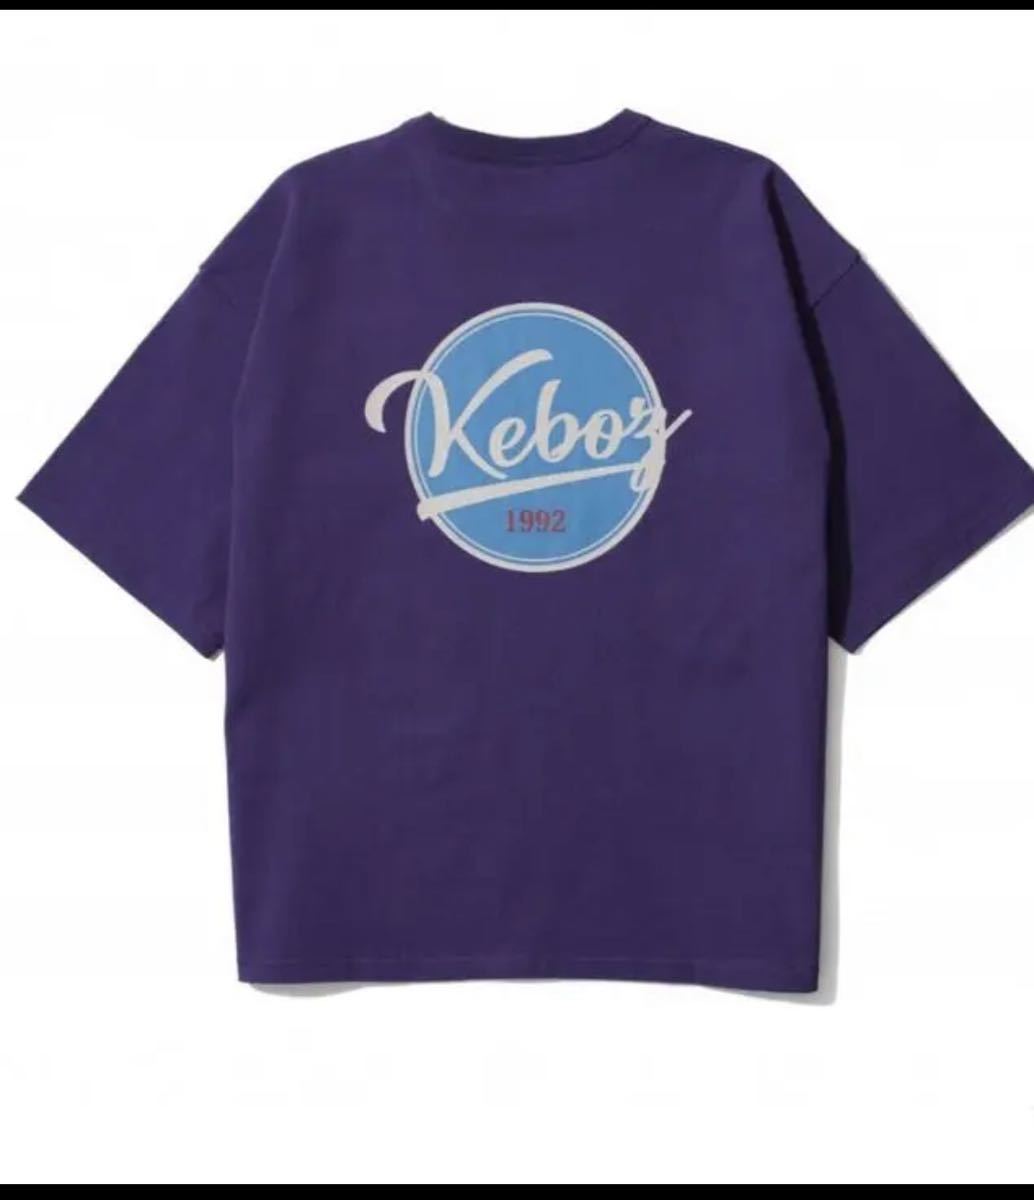 keboz tシャツ lawyerkh.com